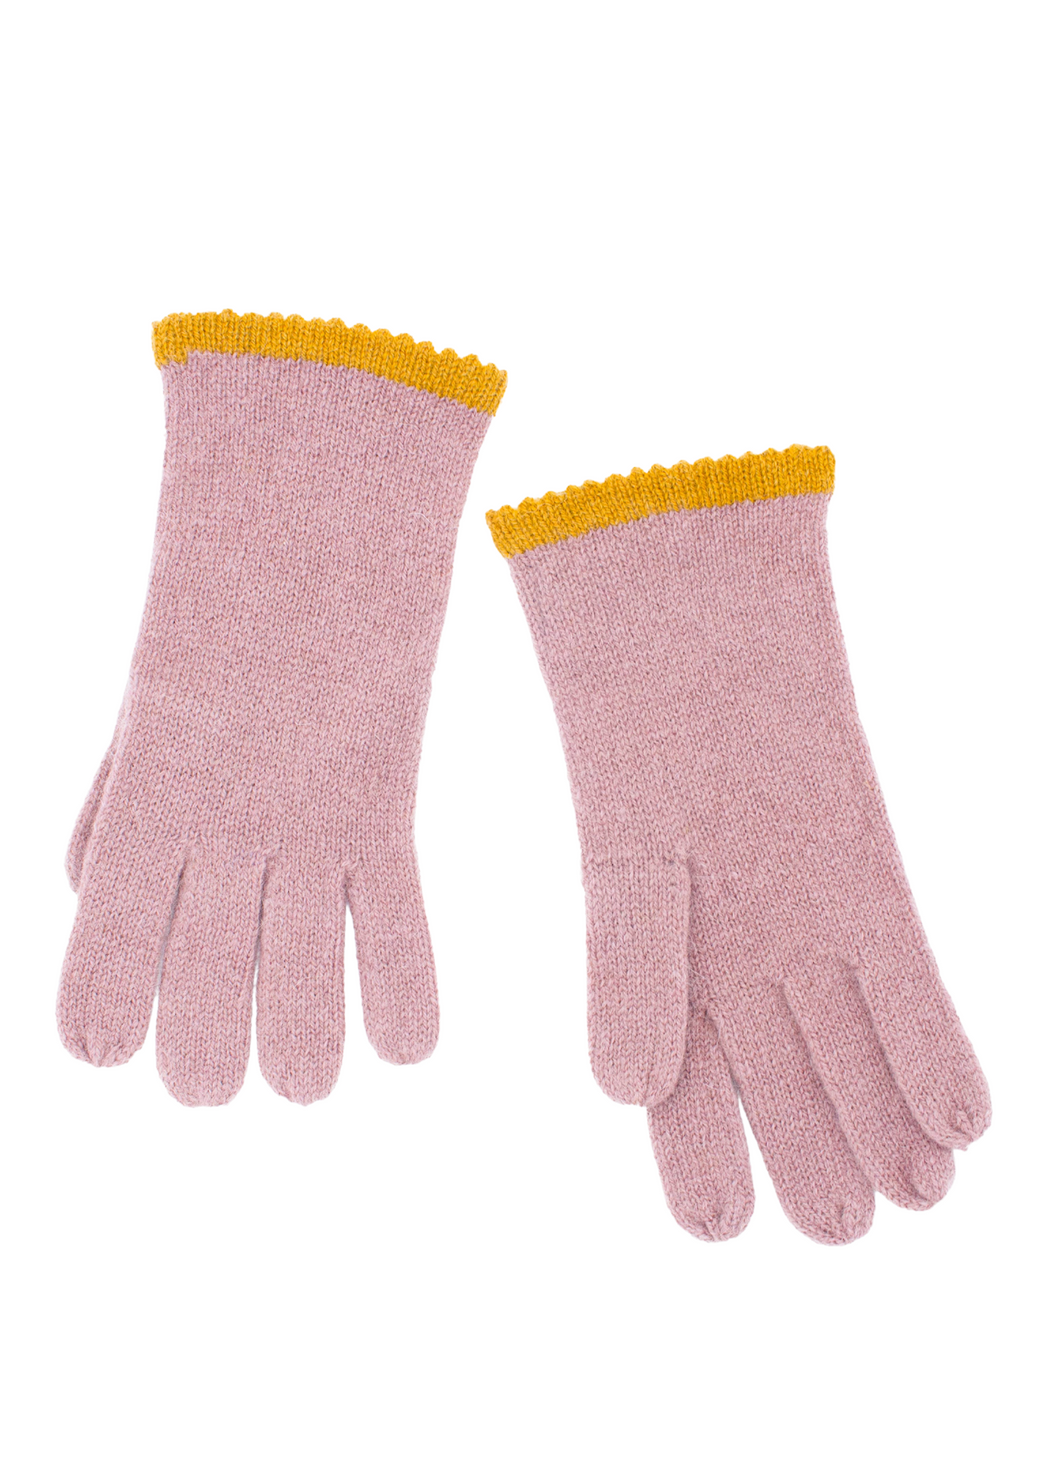 Alpaca Gloves - Pale Pink + Pastel Yellow